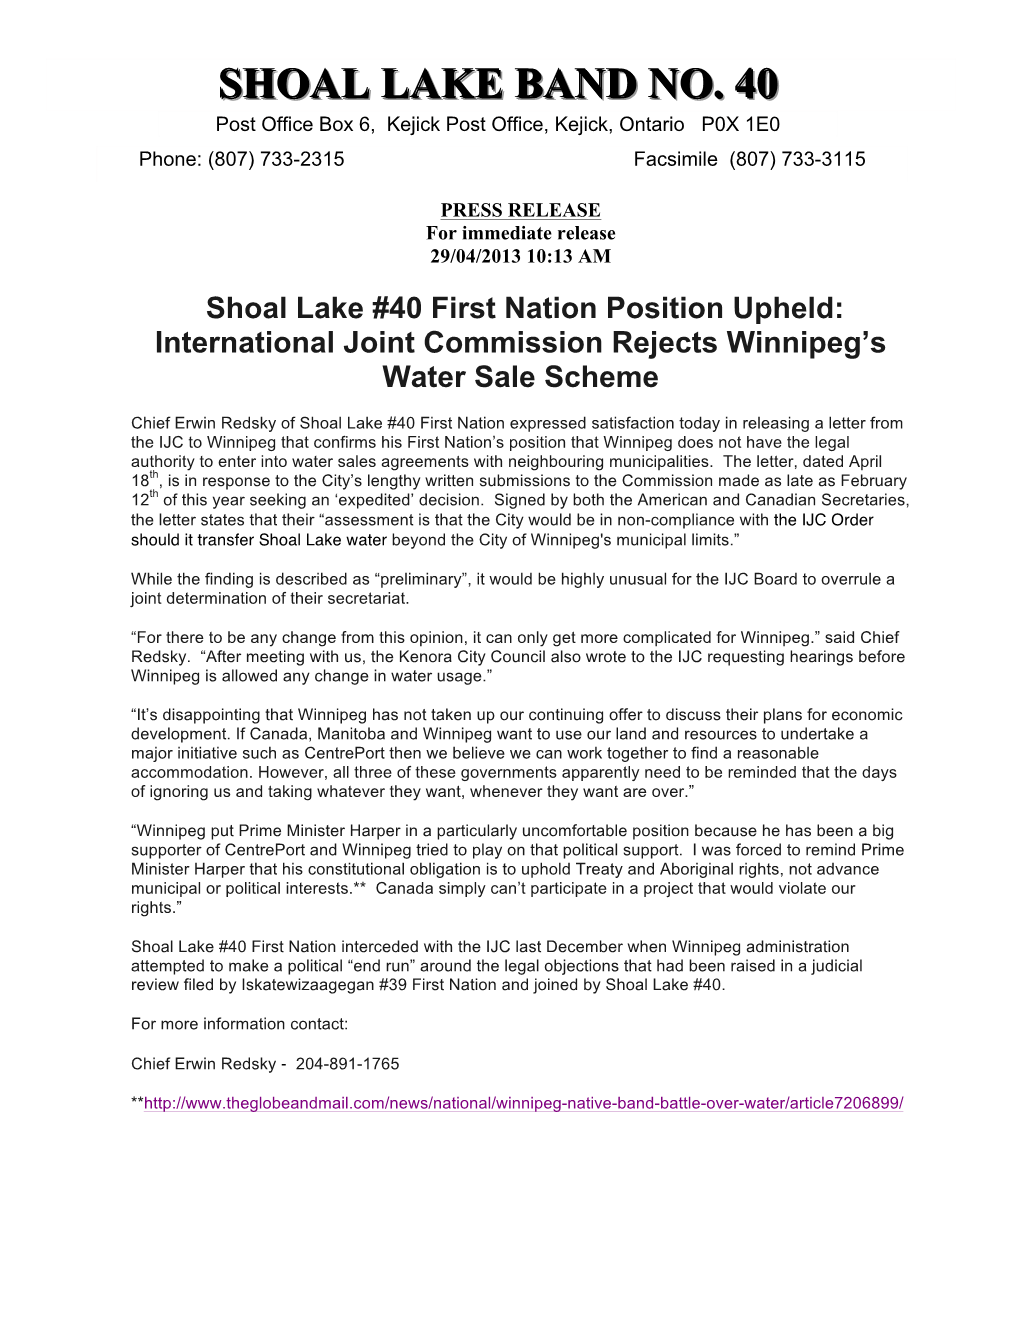 International Joint Commission Rejects Winnipeg’S Water Sale Scheme